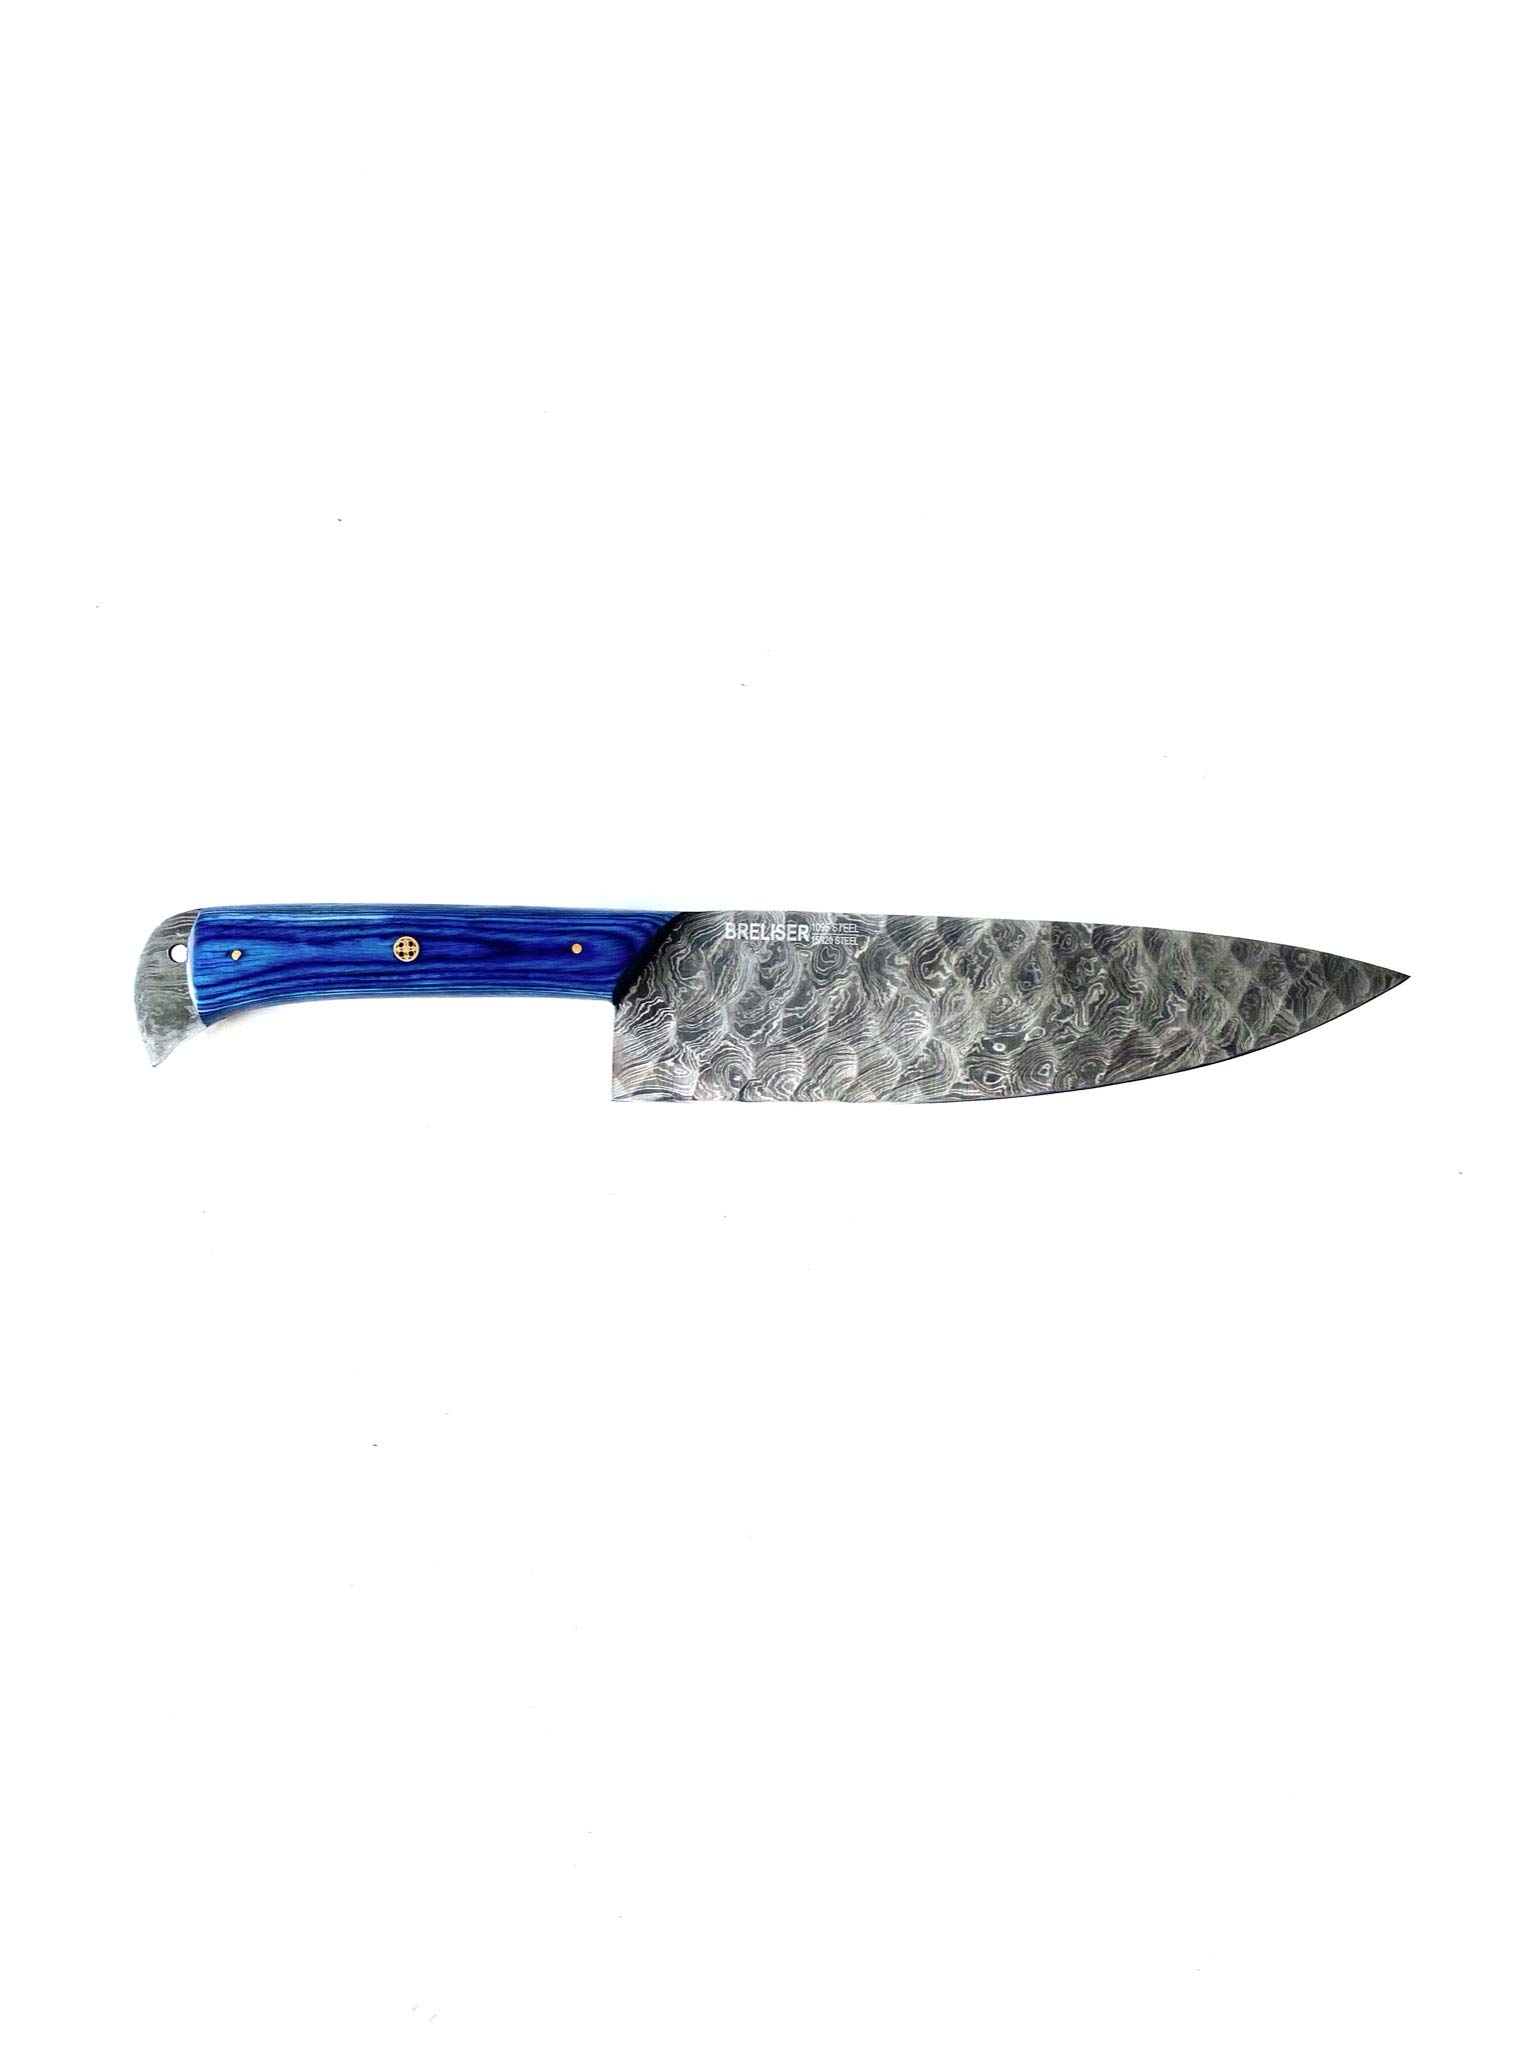 Breliser 3-Piece Diamond-Hammered Damascus Knife Set, Blue Pakkawood Handle - Chef, Santoku, Paring - Leather Knife Roll - Knife Care Kit